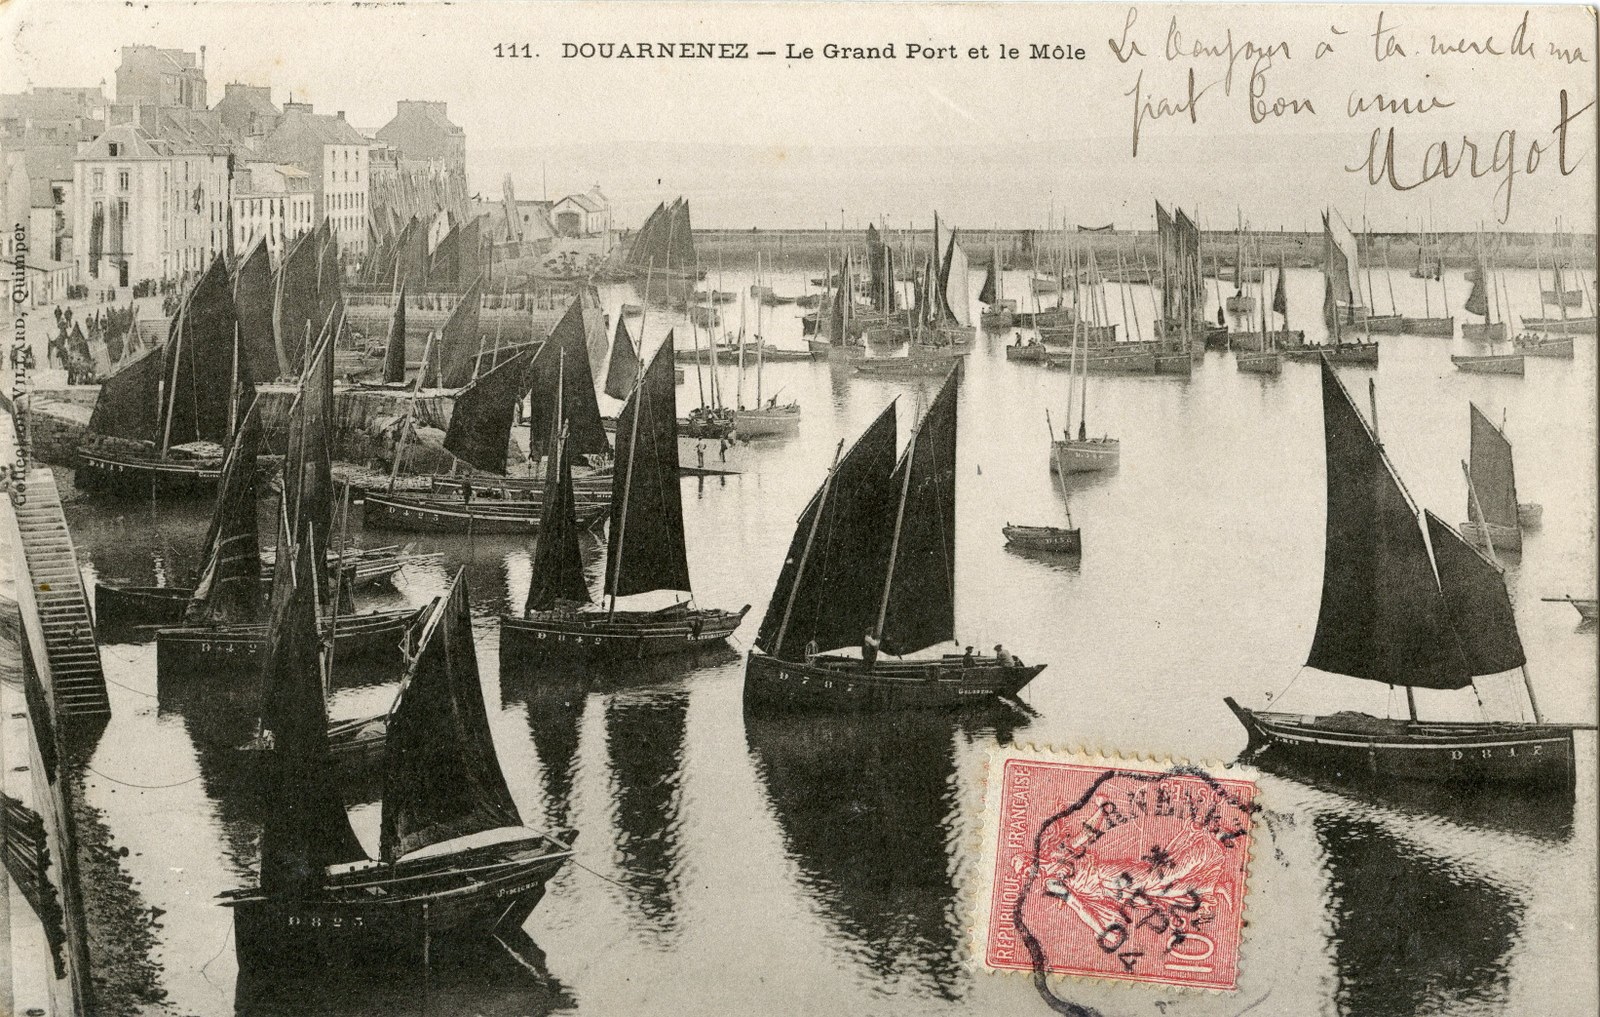 Source : Carte postale n° 111, Collection Villard, Quimper